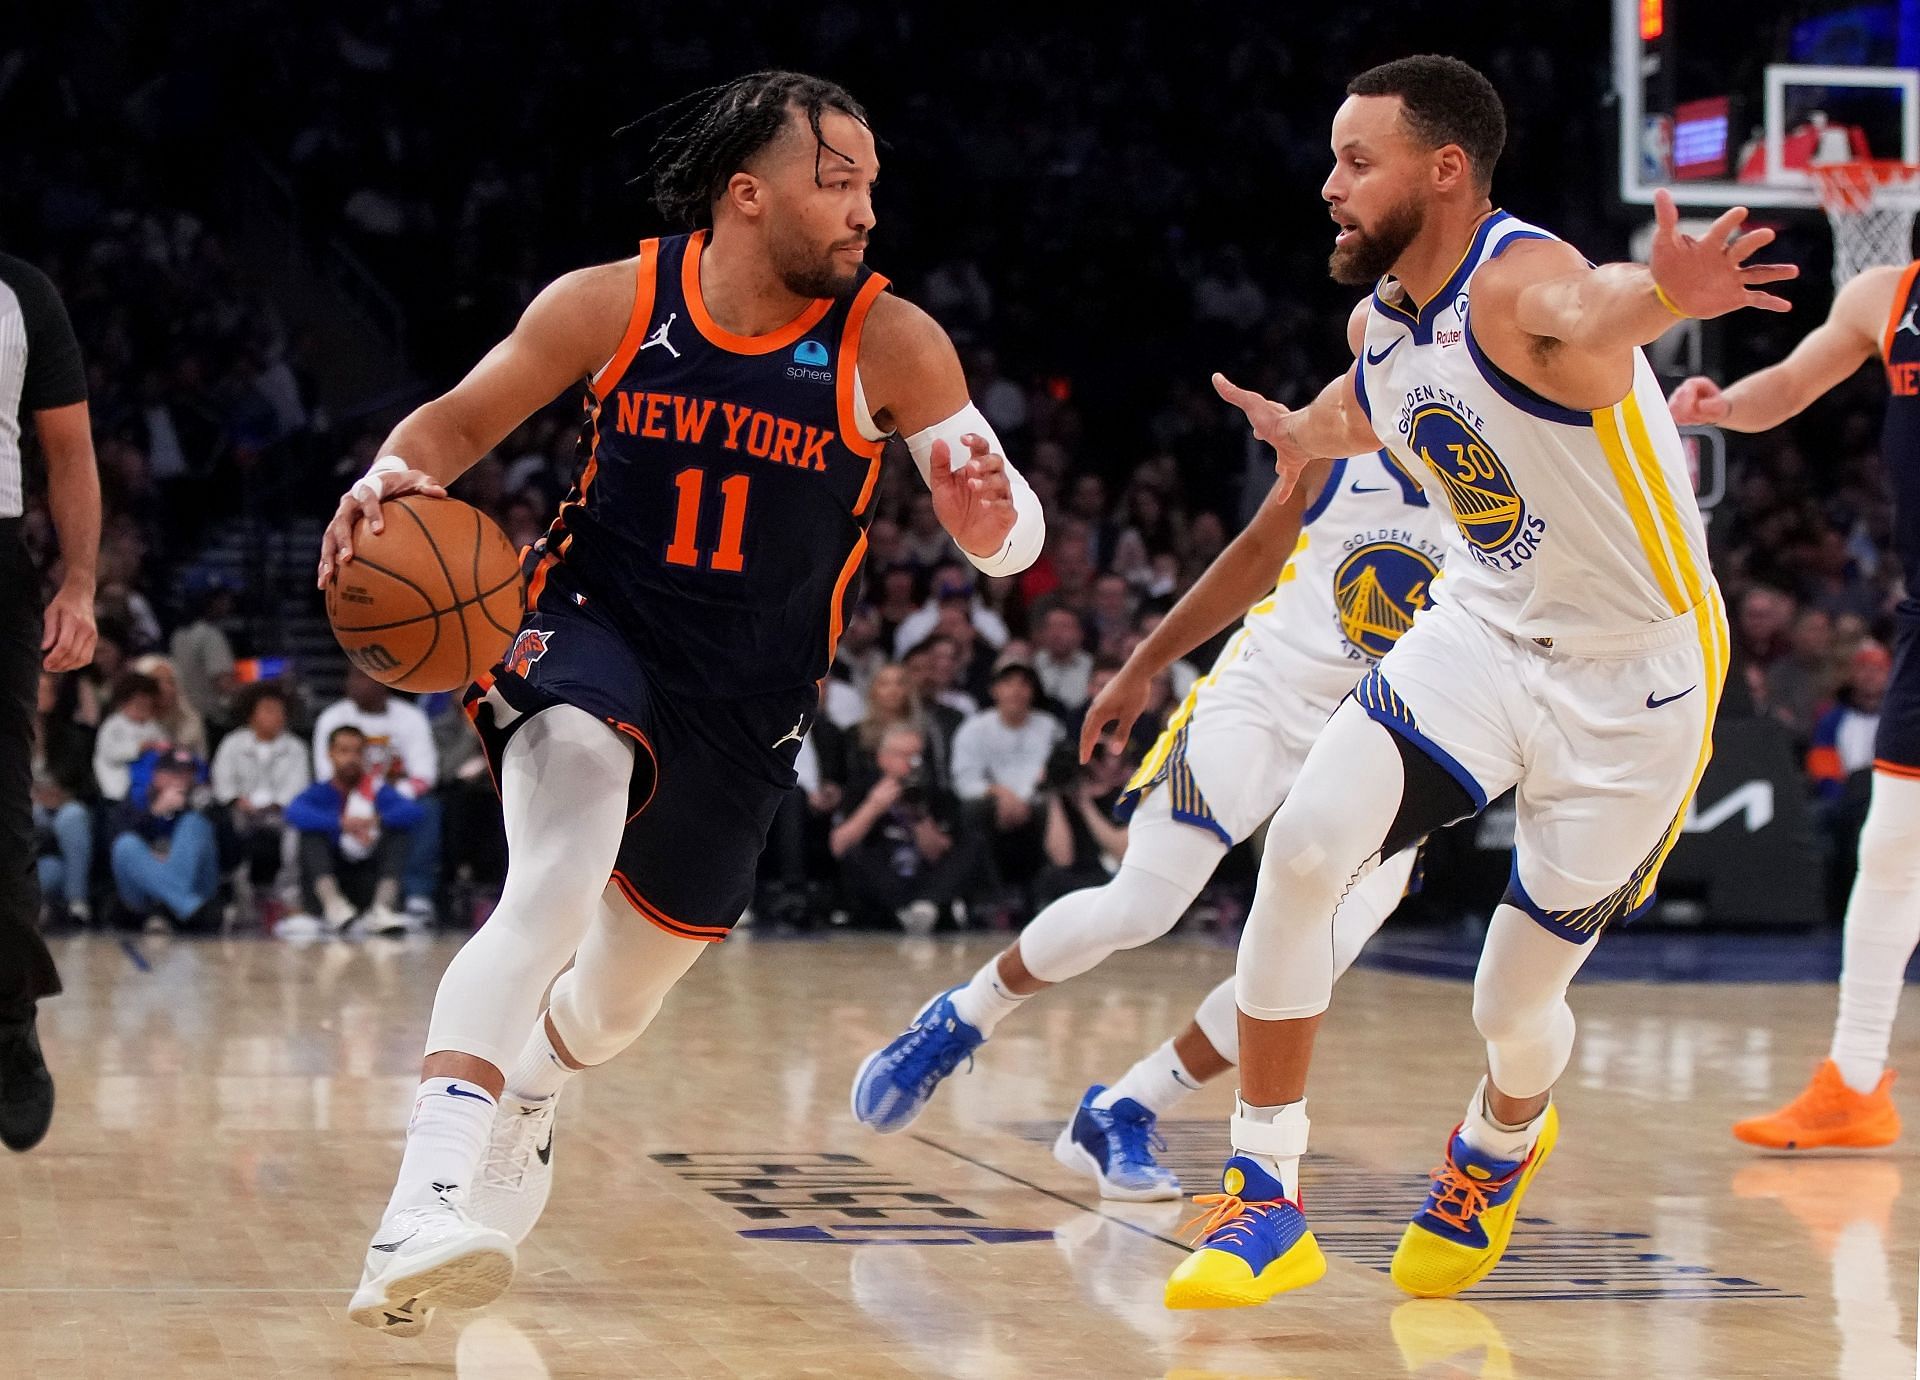 How to watch New York Knicks vs Golden State Warriors tonight (Mar. 18)